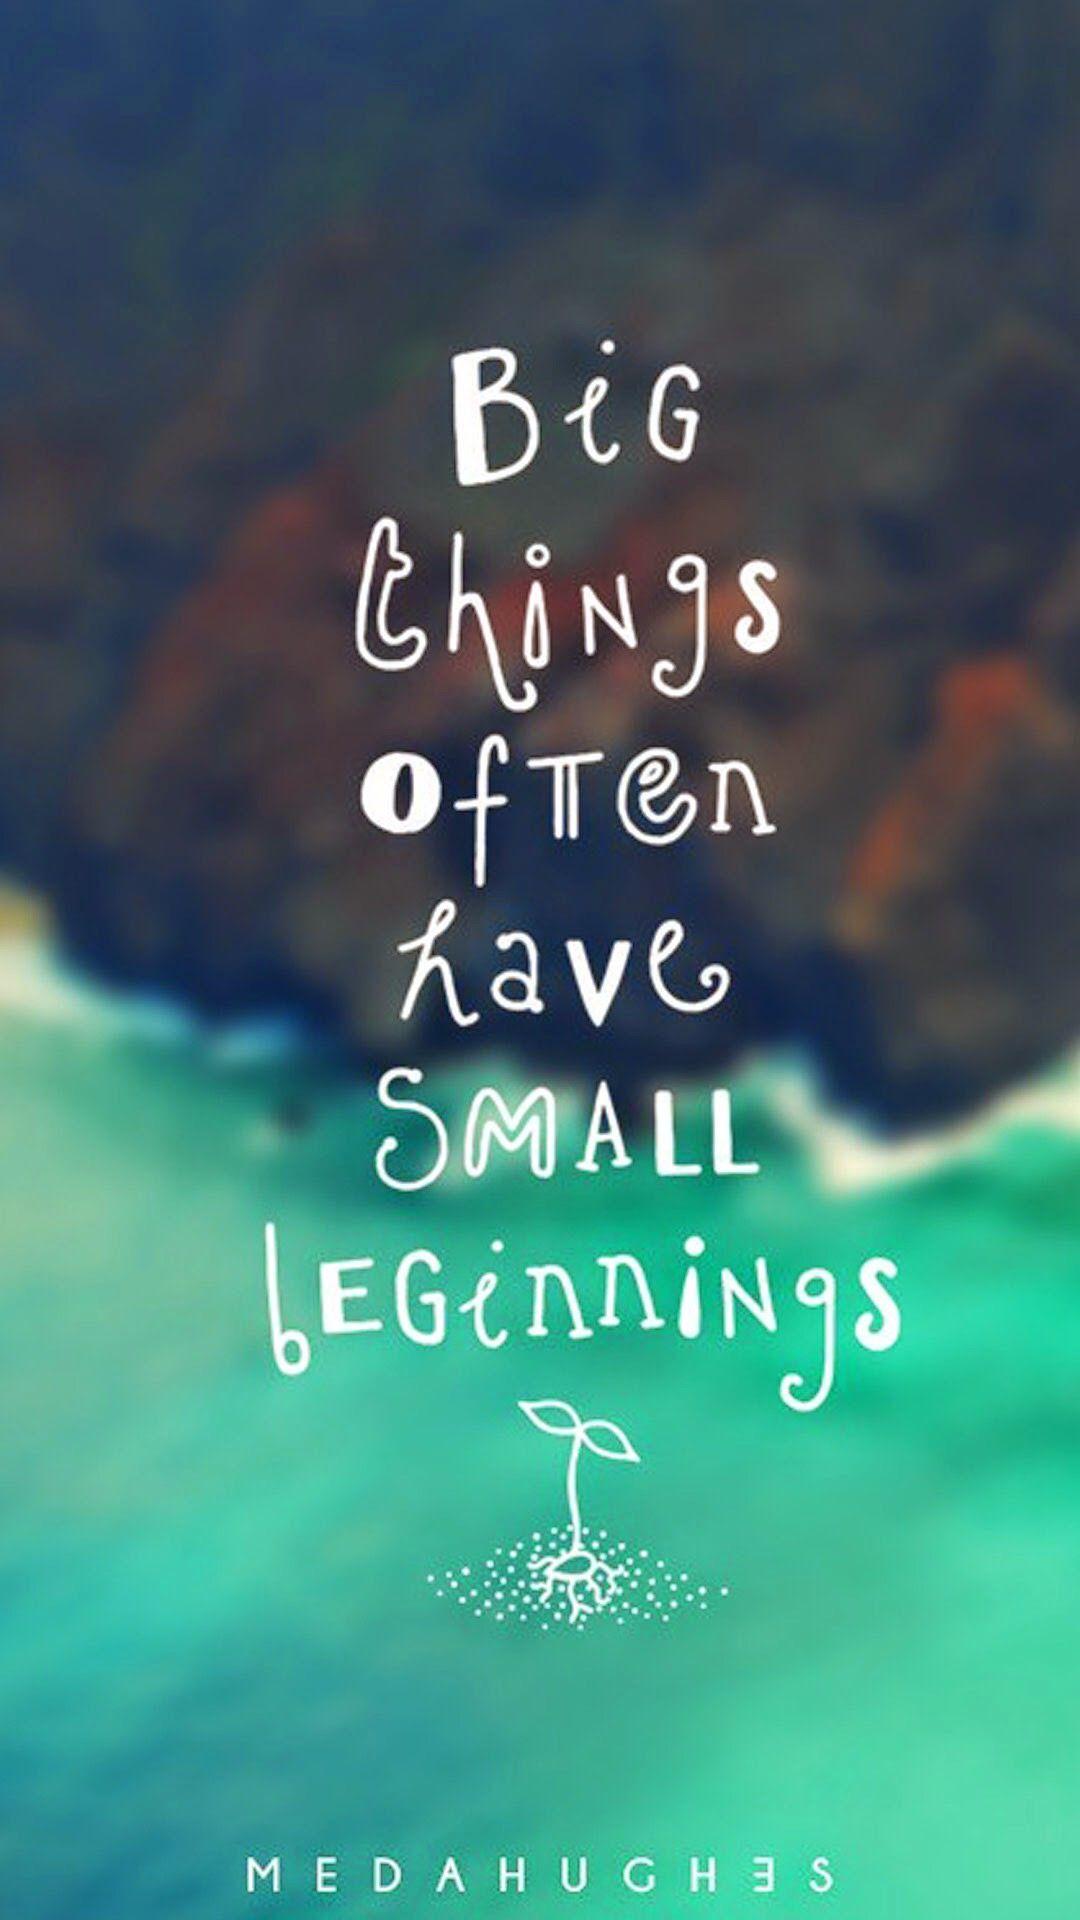 Small Beginning. Inspirational quotes, Wallpaper quotes, Best inspirational quotes